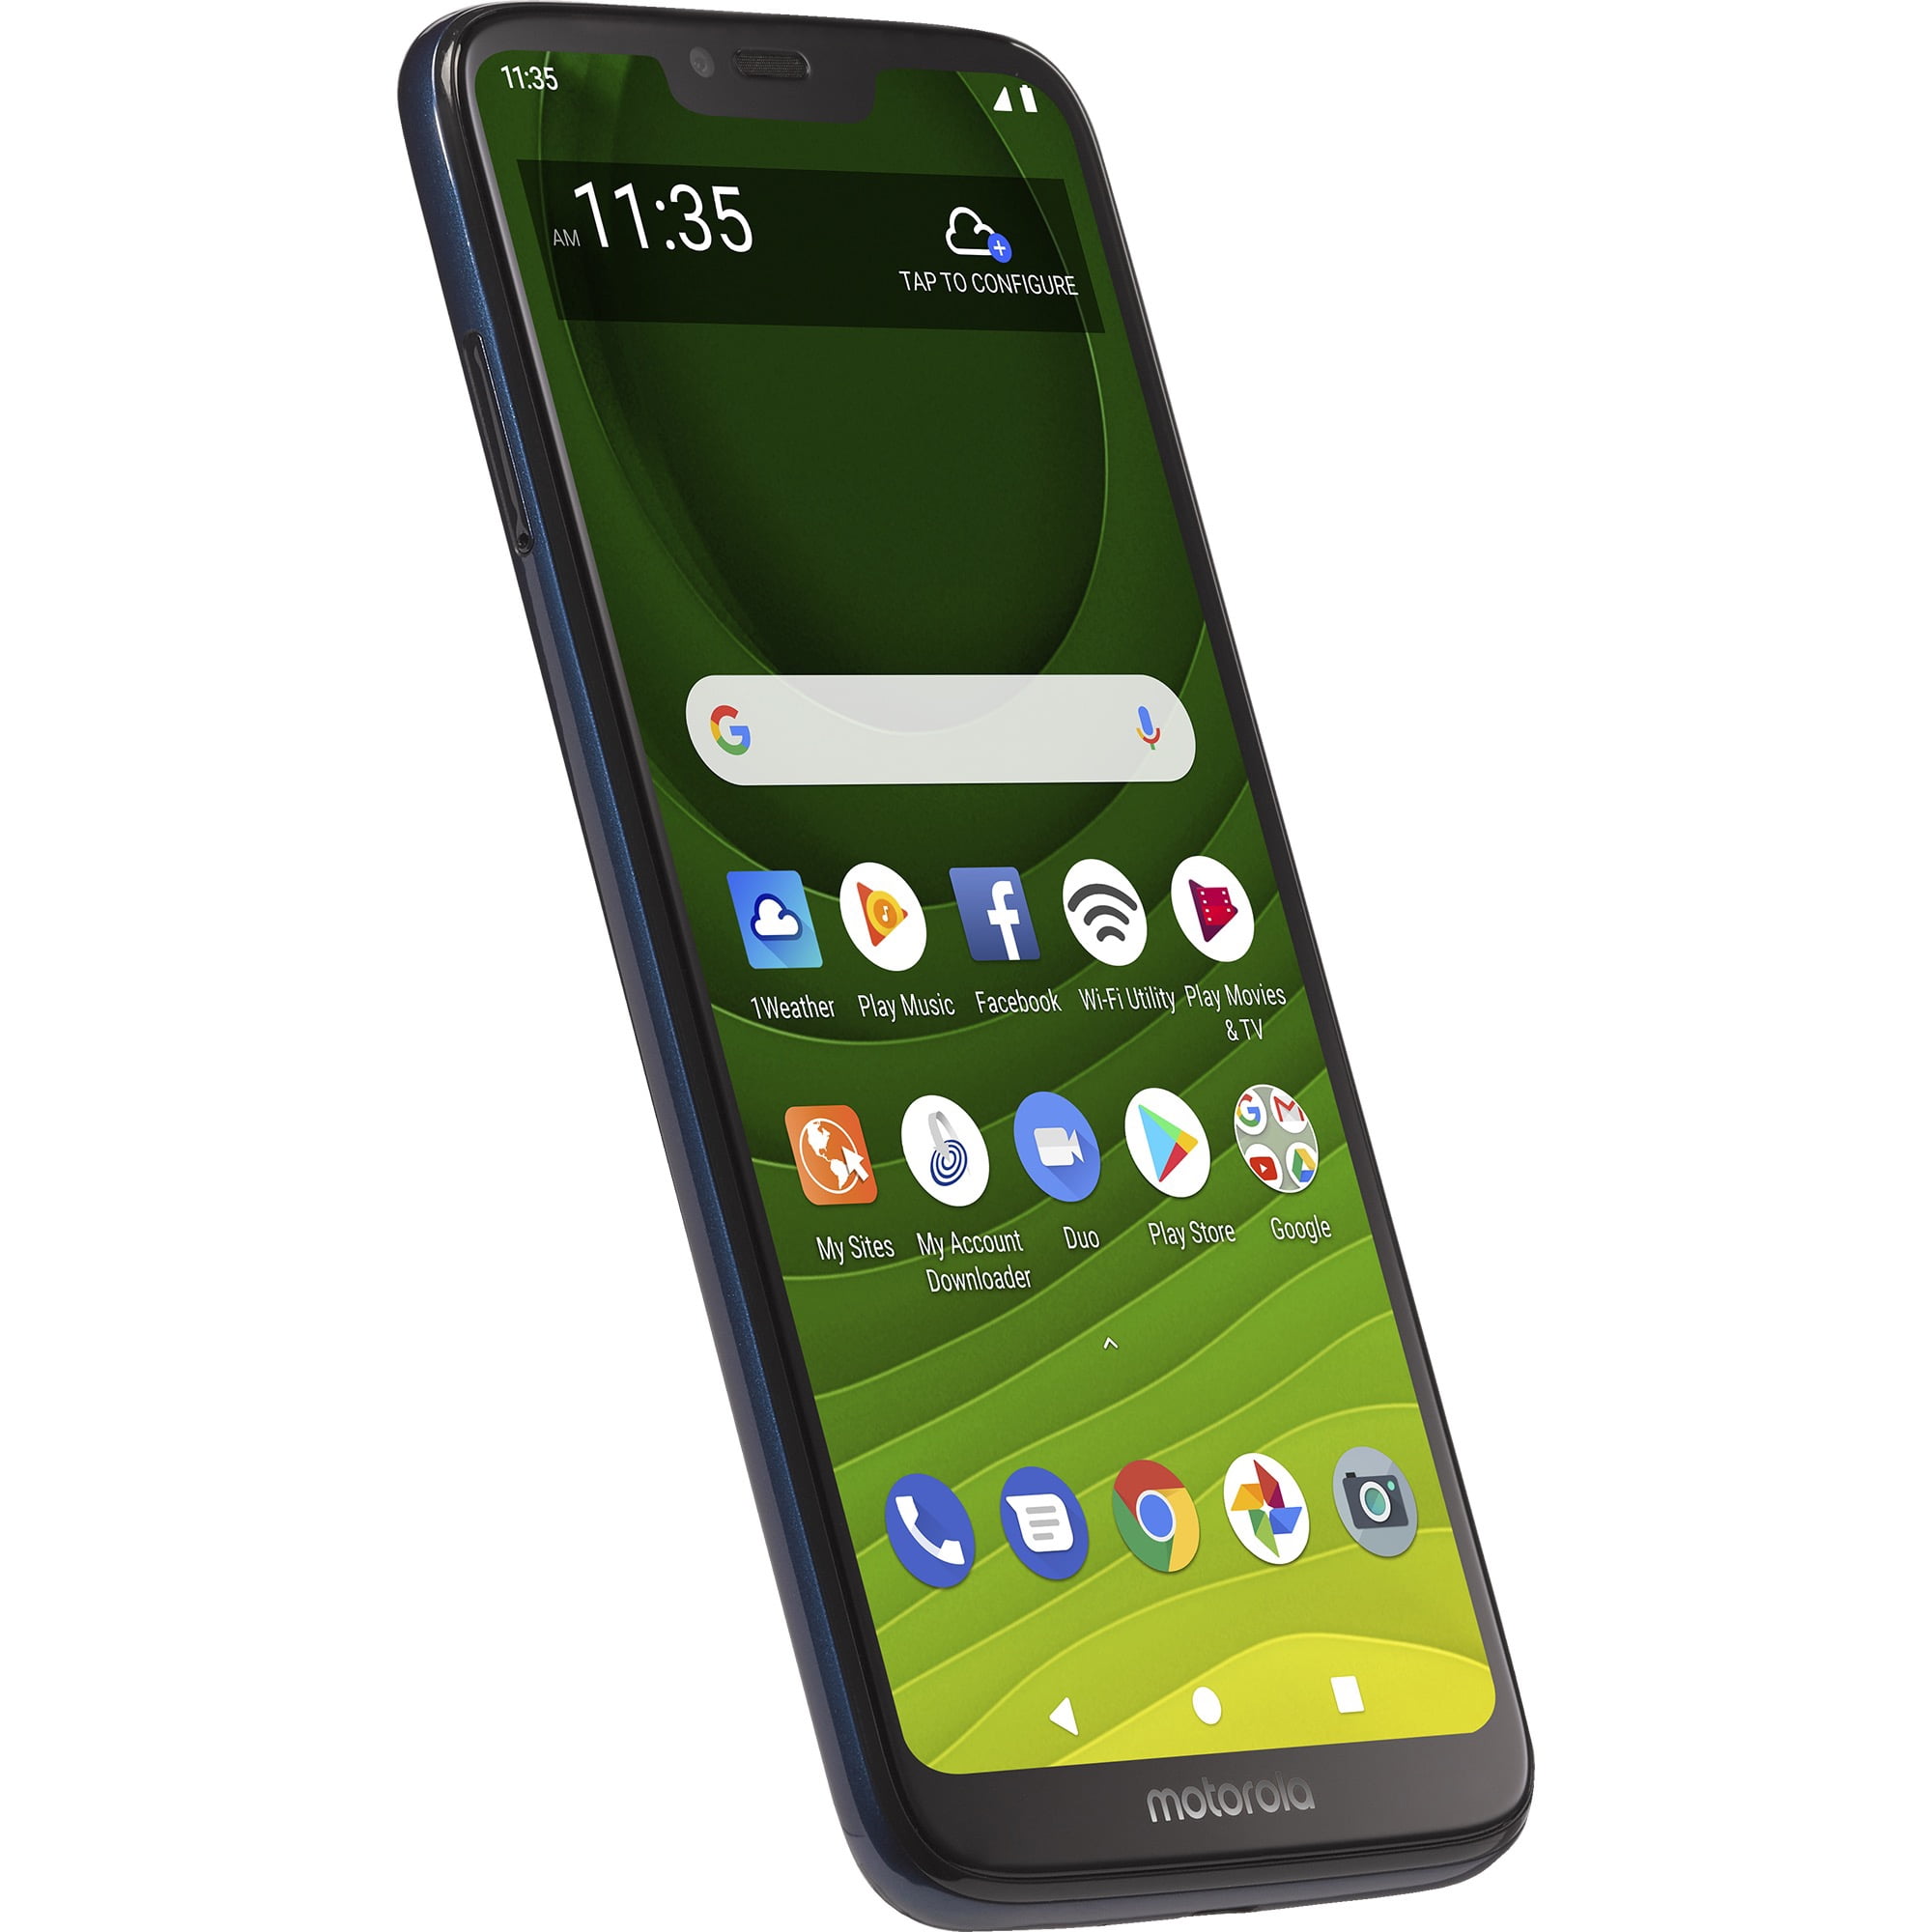 revolutie Conform Passief Straight Talk Motorola Moto g7 Optimo Maxx, 32 GB, Blue - Prepaid  Smartphone - Walmart.com